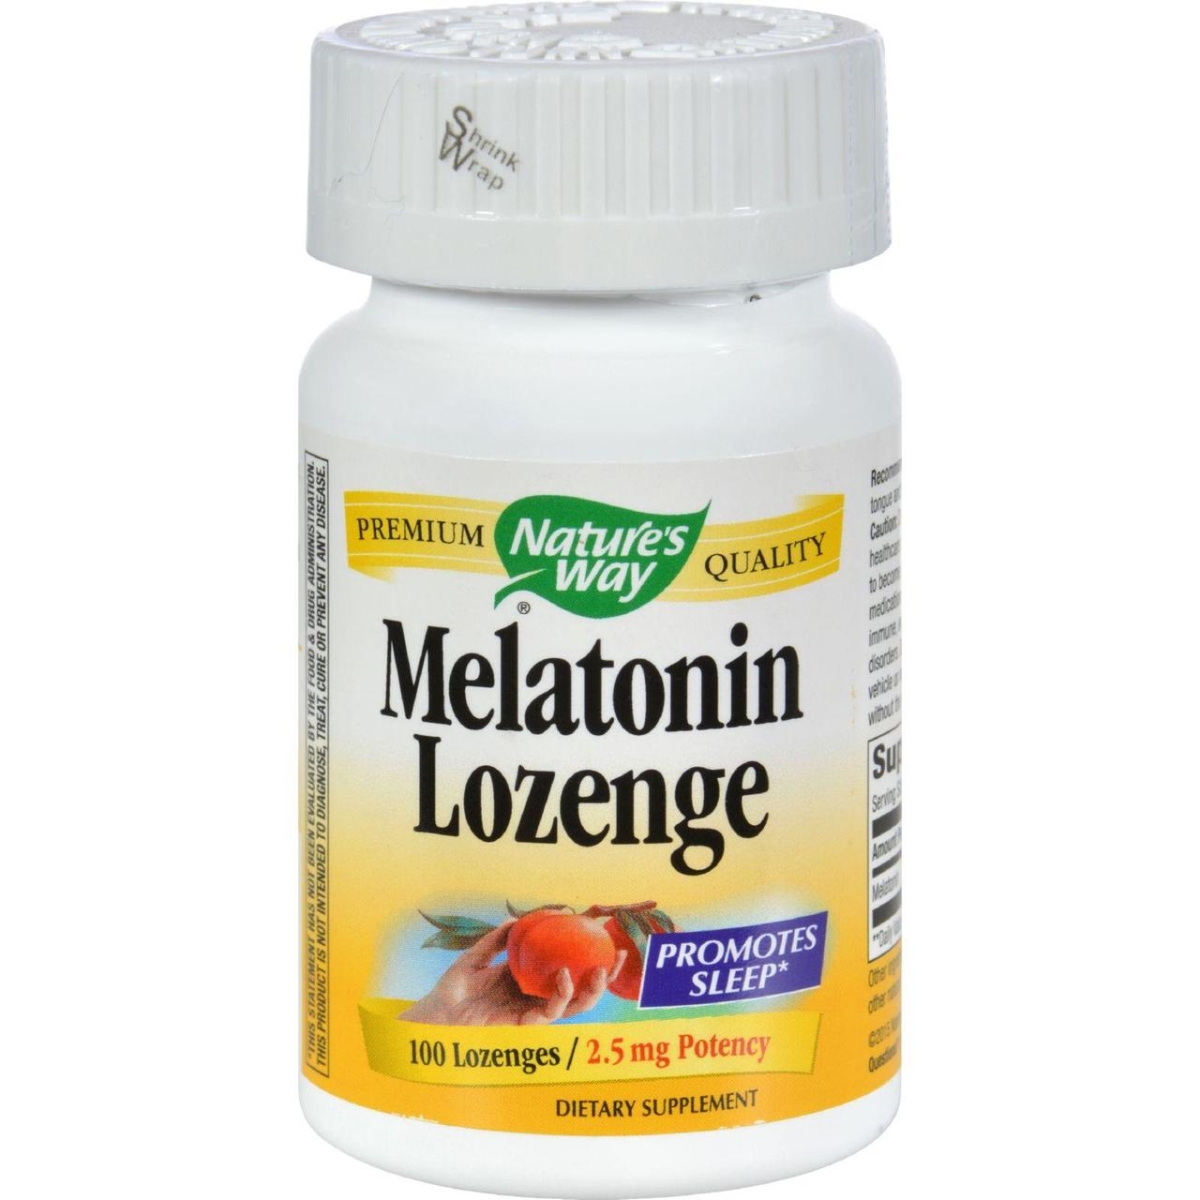 Hg0454926 2.5 Mg Melatonin Lozenge - Fruit, 100 Lozenges